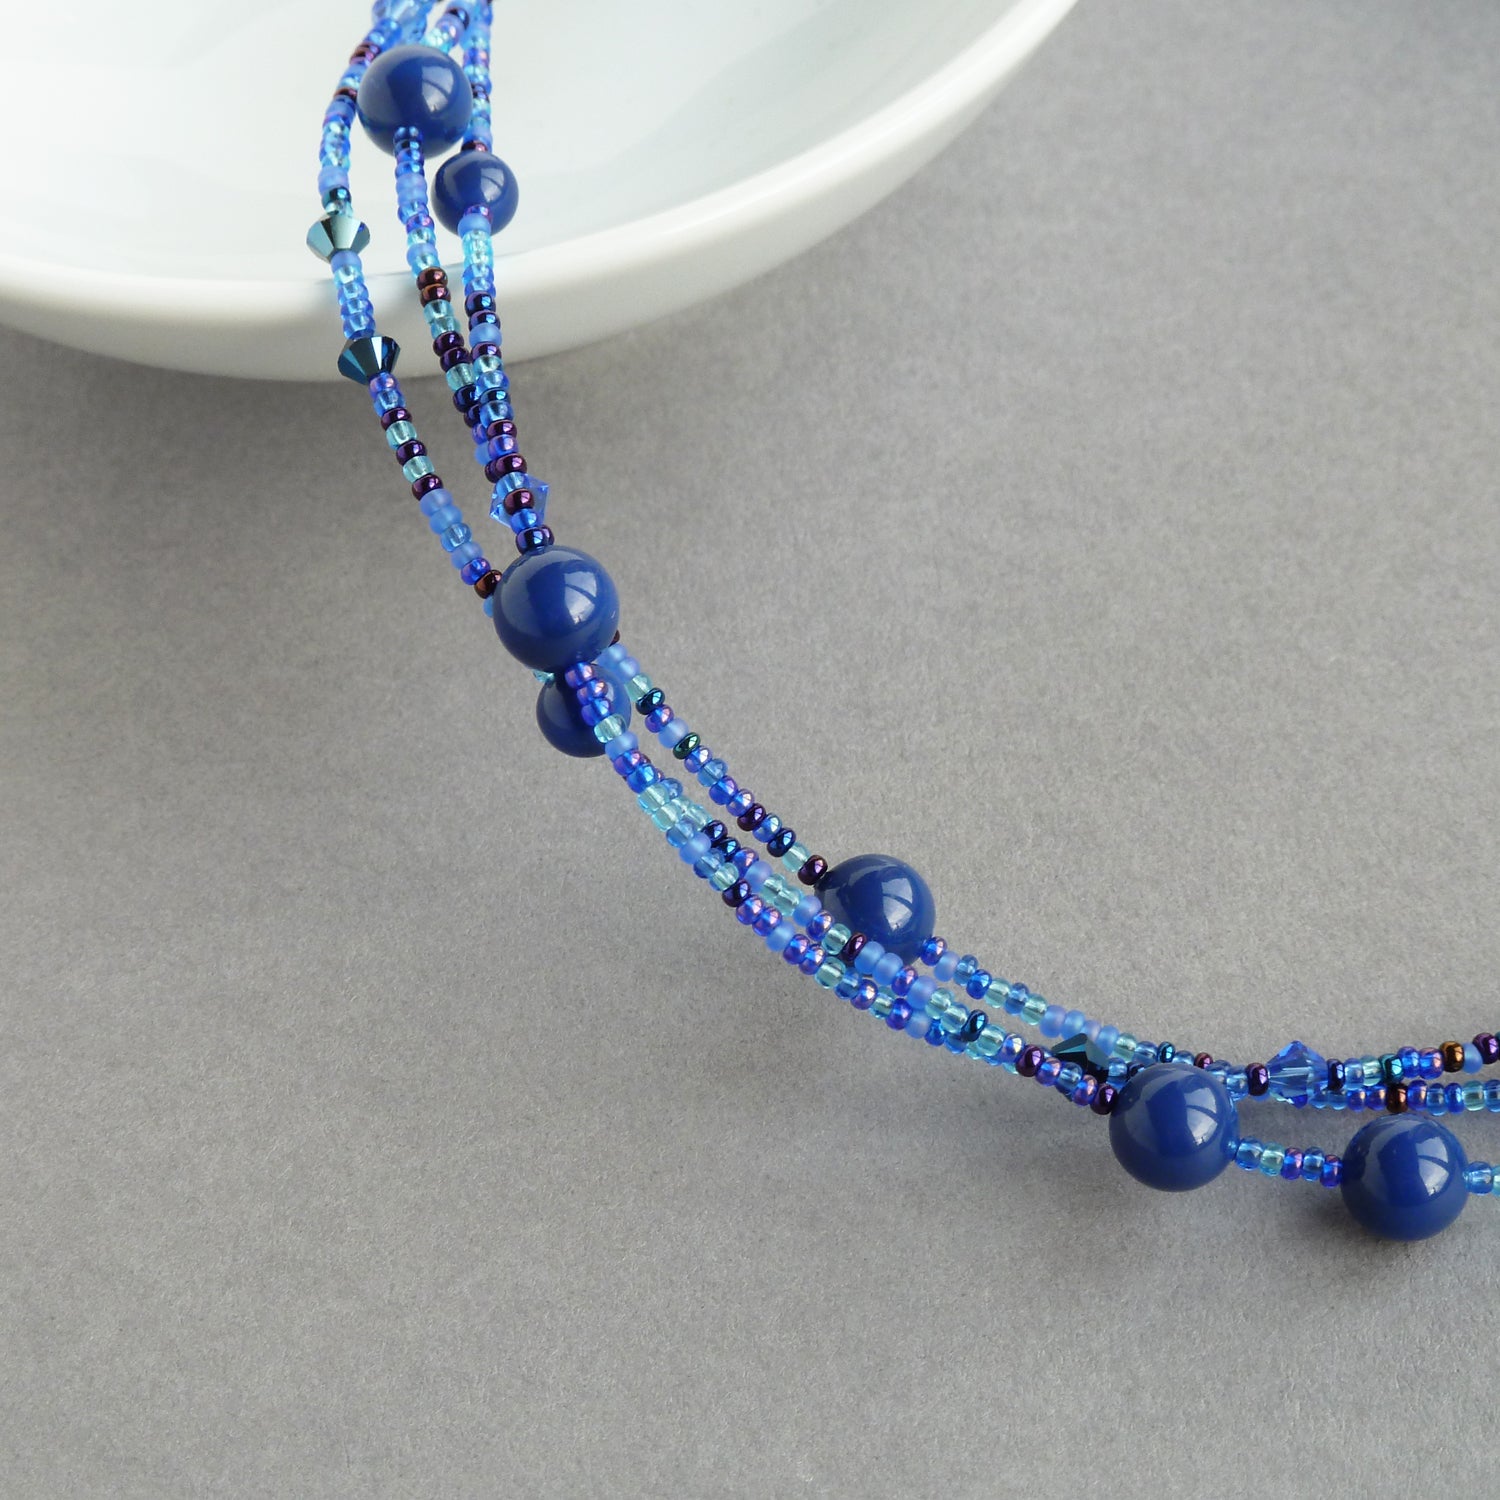 Cobalt blue necklace